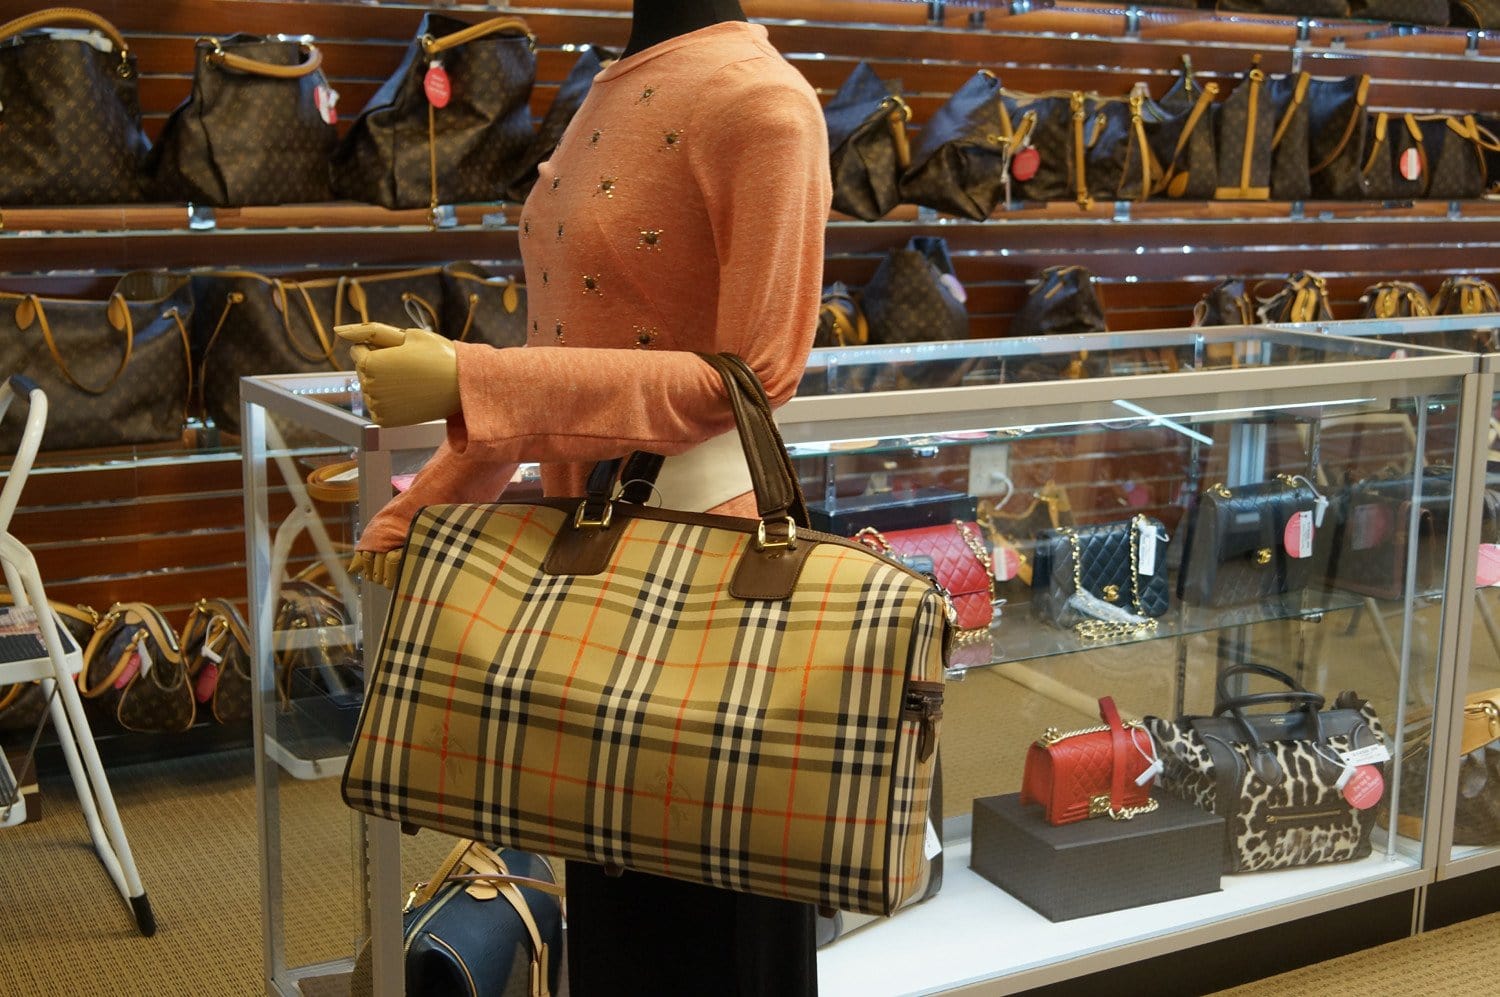 BURBERRY-Nova-Plaid-Canvas-Leather-Boston-Bag-Travel-Bag – dct-ep_vintage  luxury Store